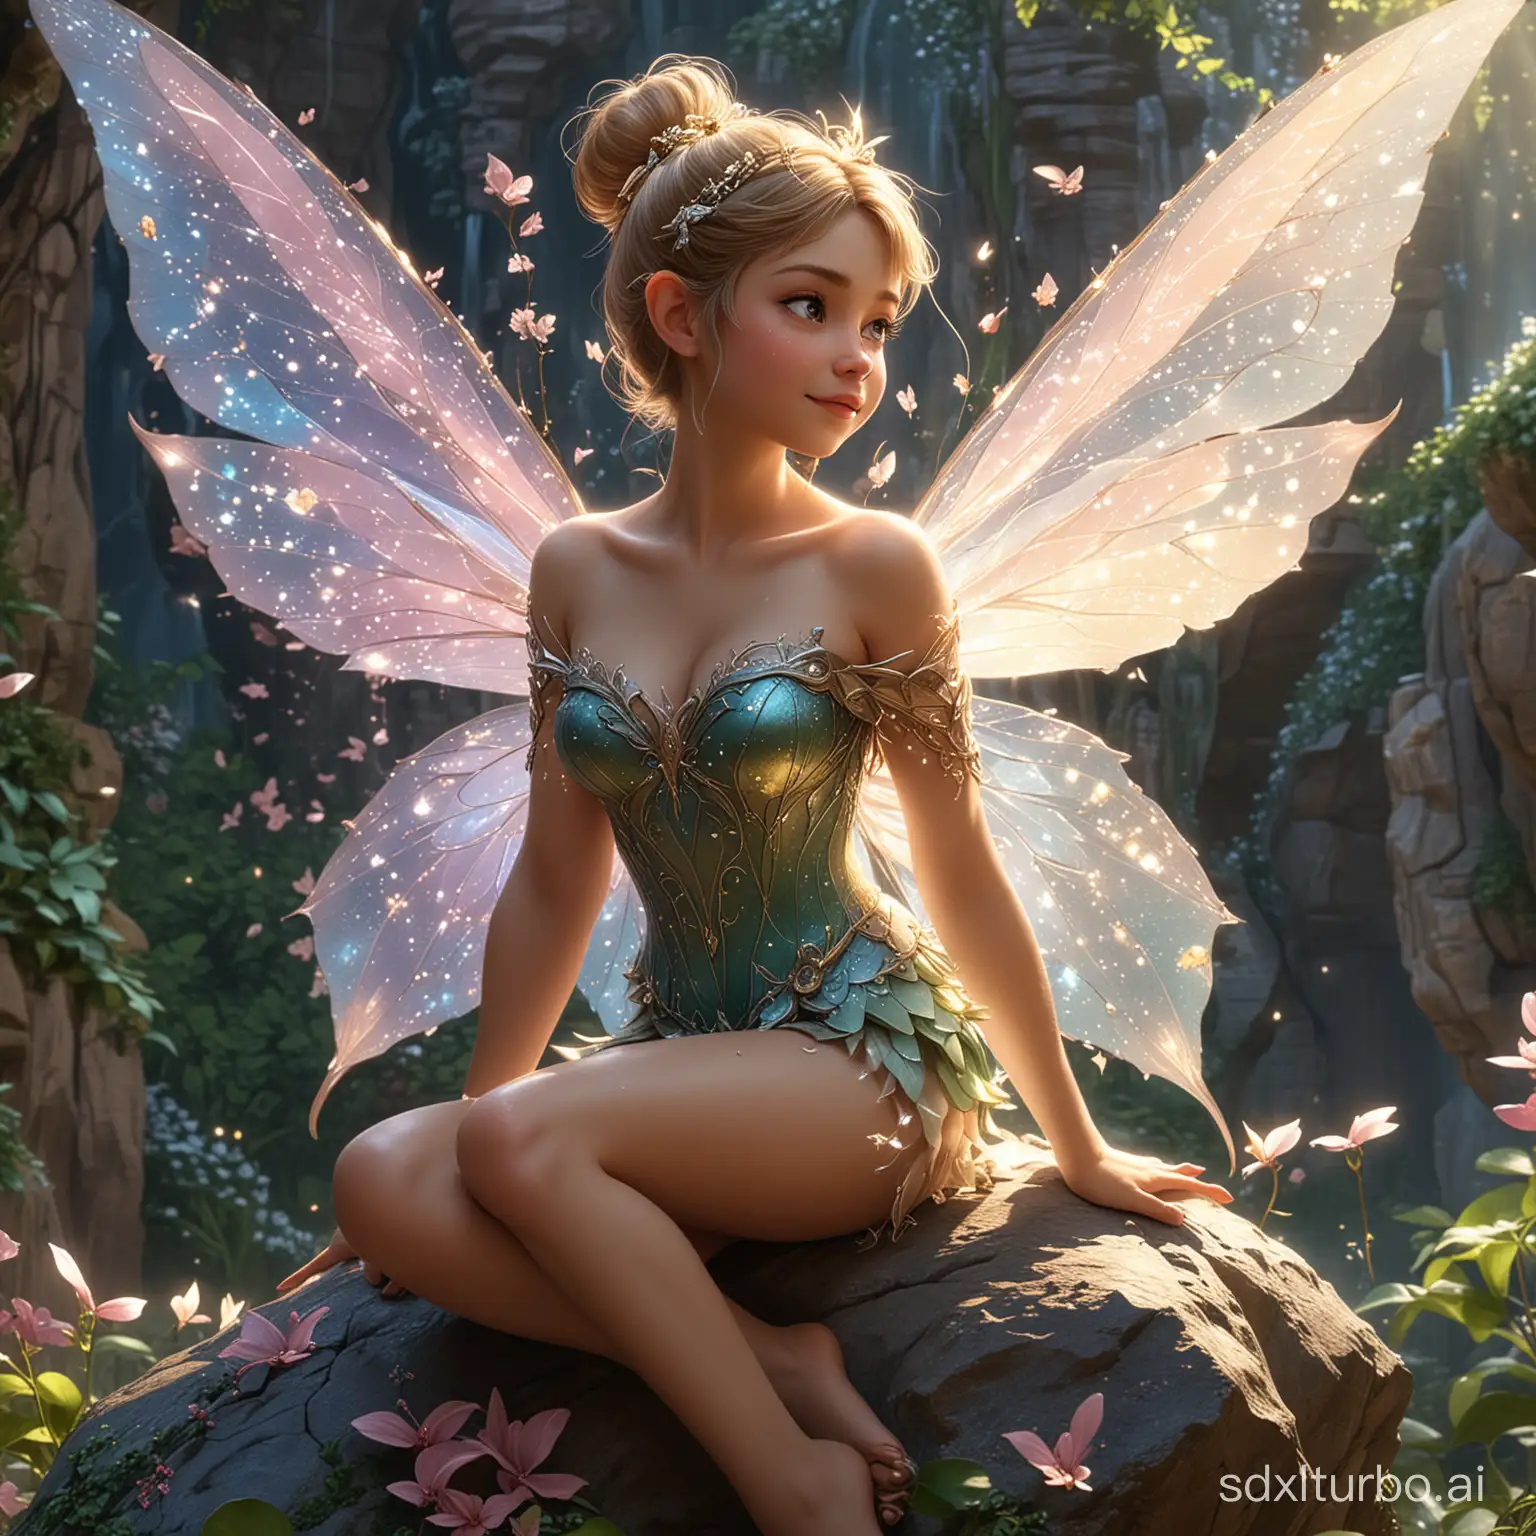 Enchanting-Pixie-Perched-on-Glistening-Rock-Disney-Style-Art